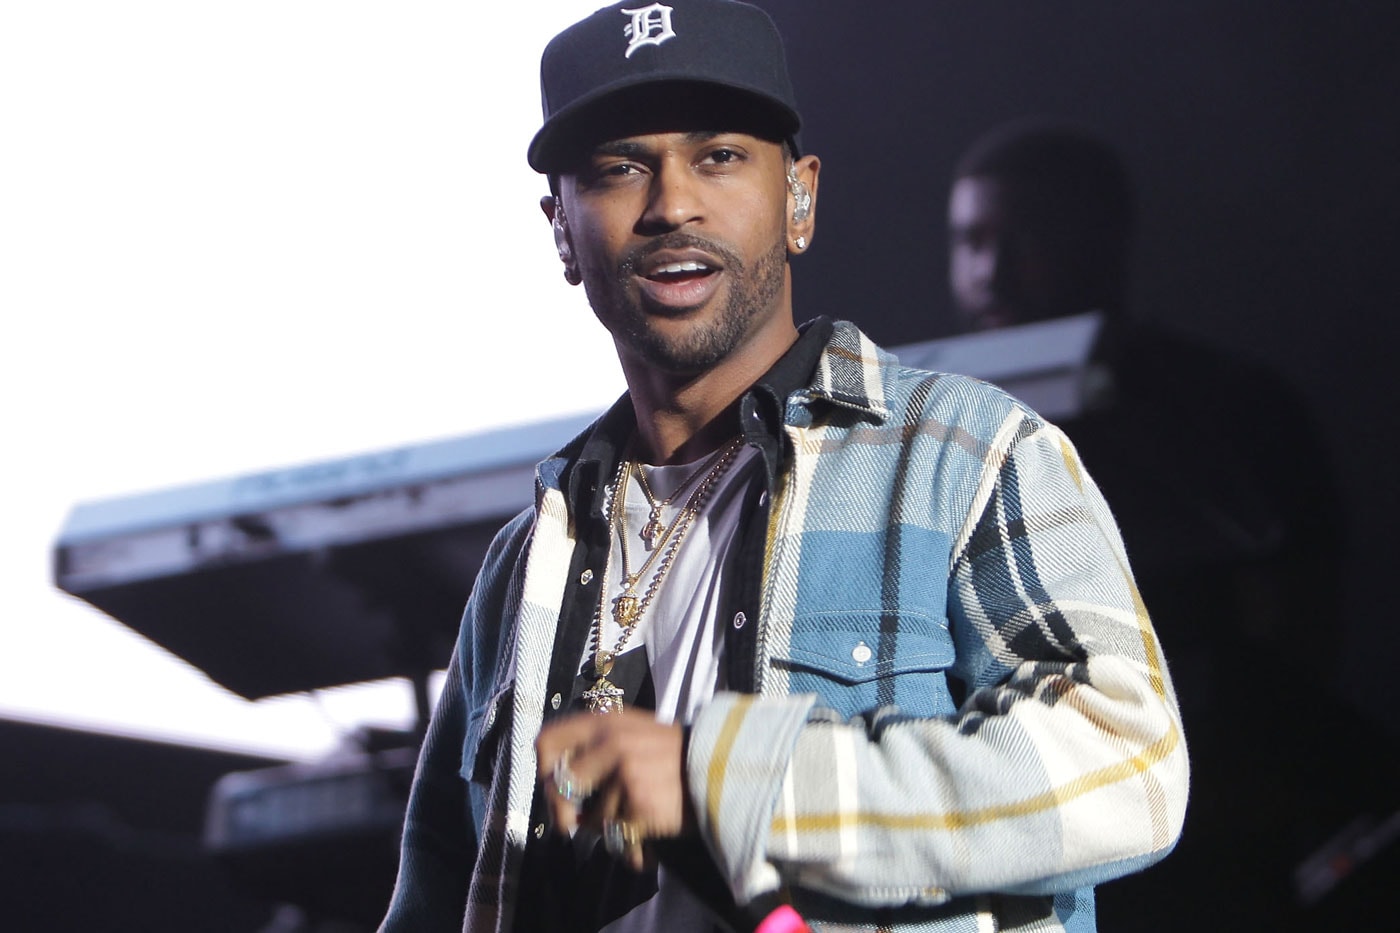 Big Sean & Metro Boomin “Bounce Back” No More Interviews hip hop rap music detroit good music kid cudi